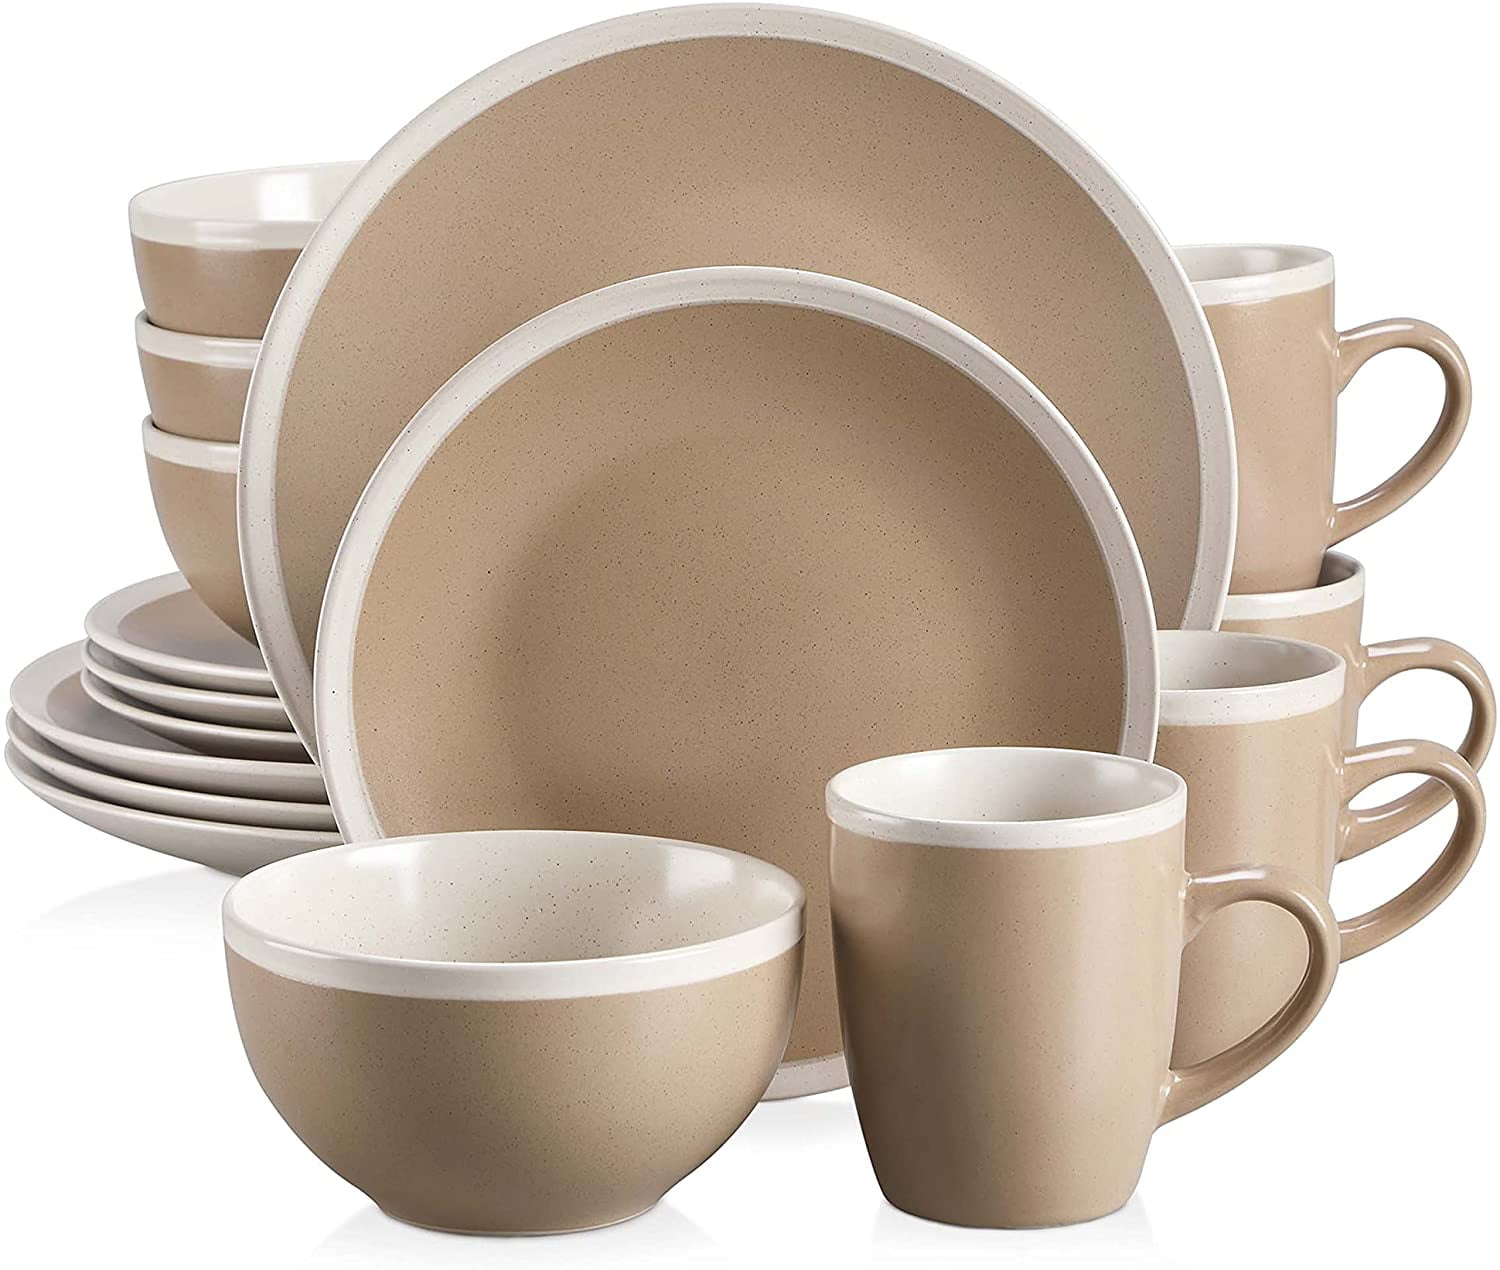 vancasso 16-Piece Pink Patterned Porcelain Mugs Cups Dinnerware